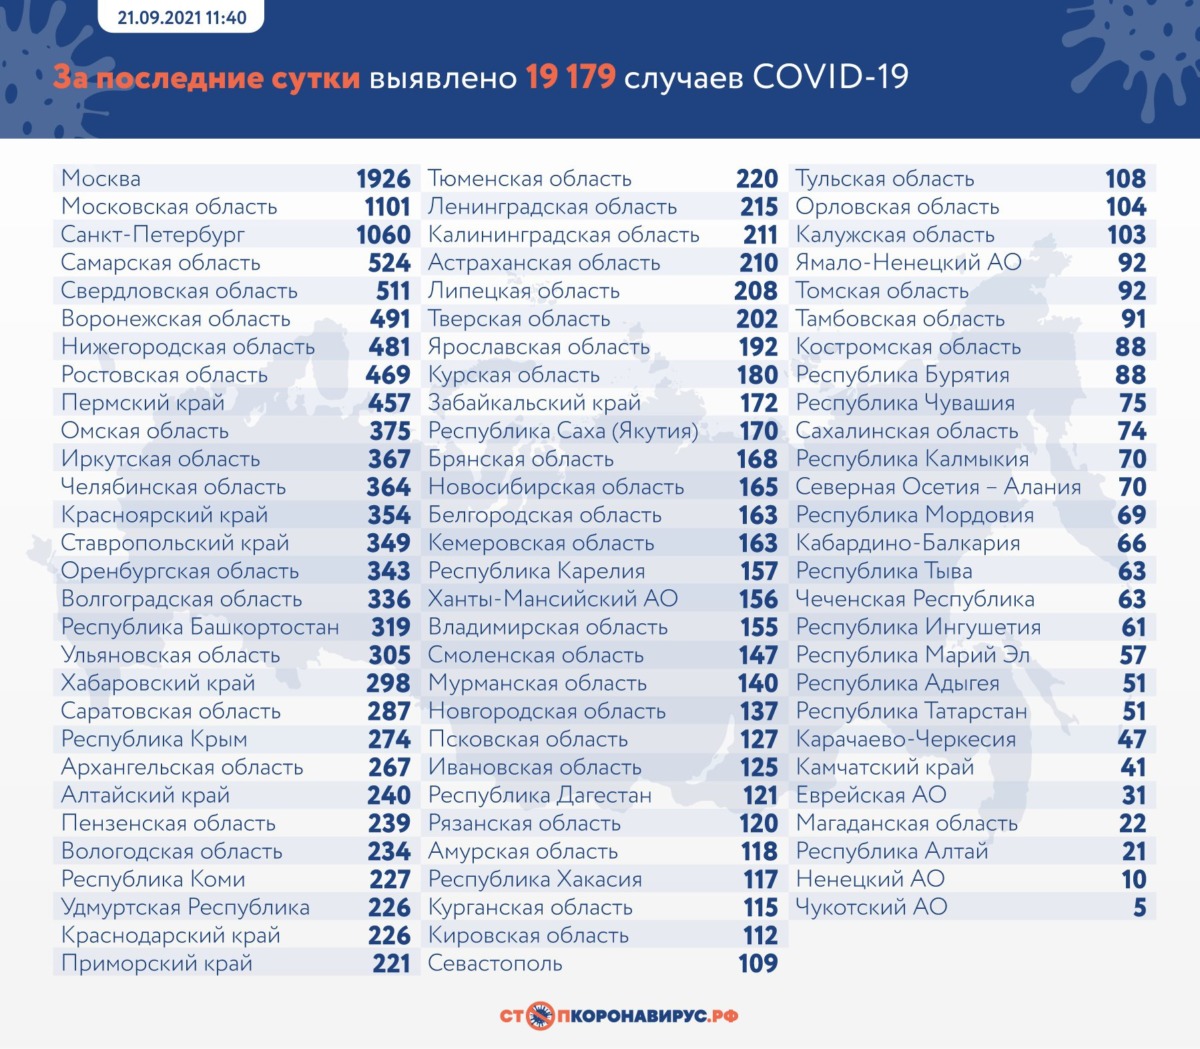 Оперативная статистика по коронавирусу в России на 21 сентября